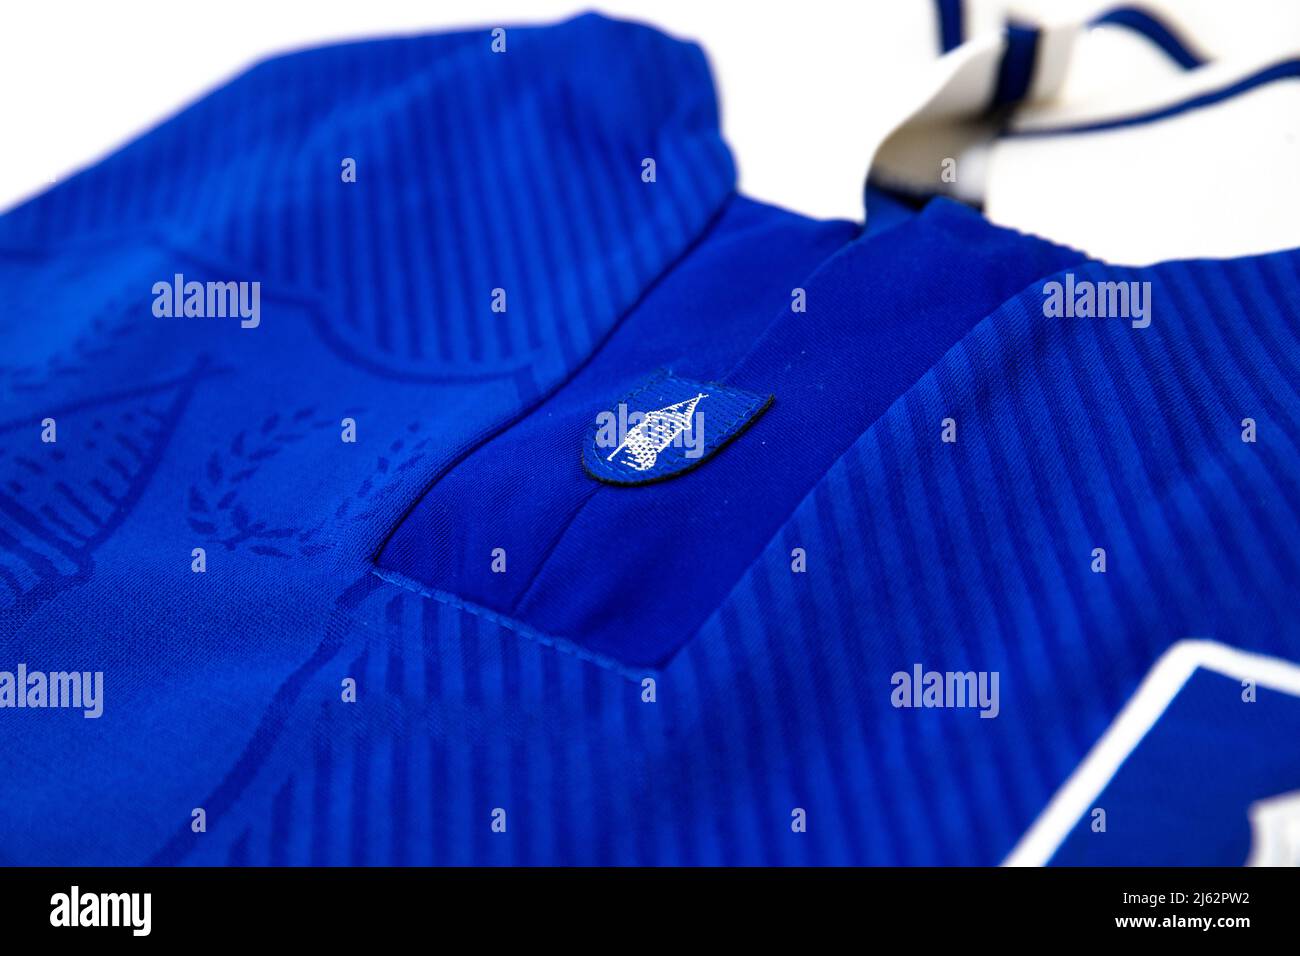 Everton castle icon on a blue folded Umbro football shirt Stock Photo